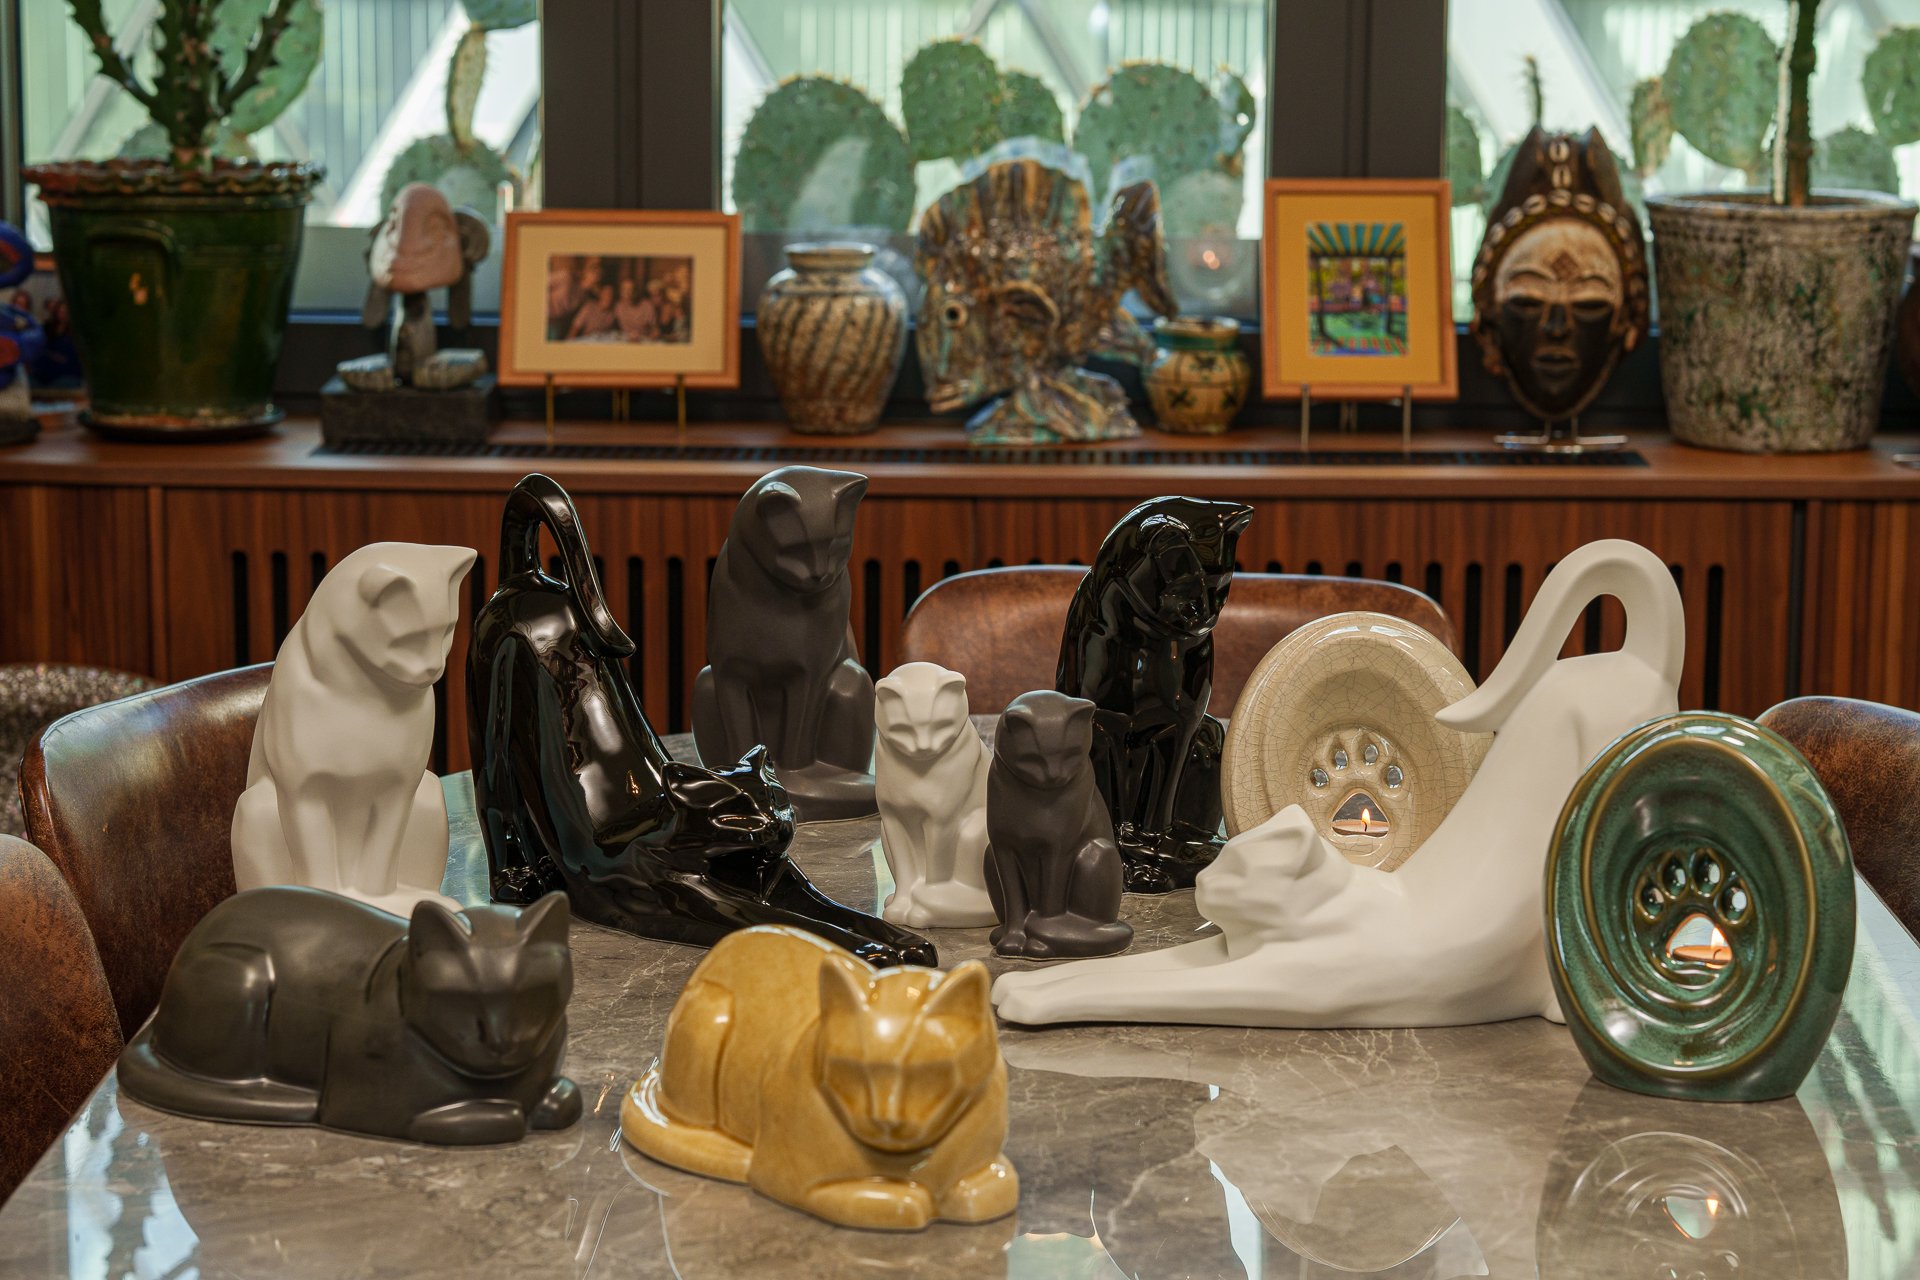 Ceramic Pet Urns for Ashes by Pulvis. Handmade Ceramic Urns